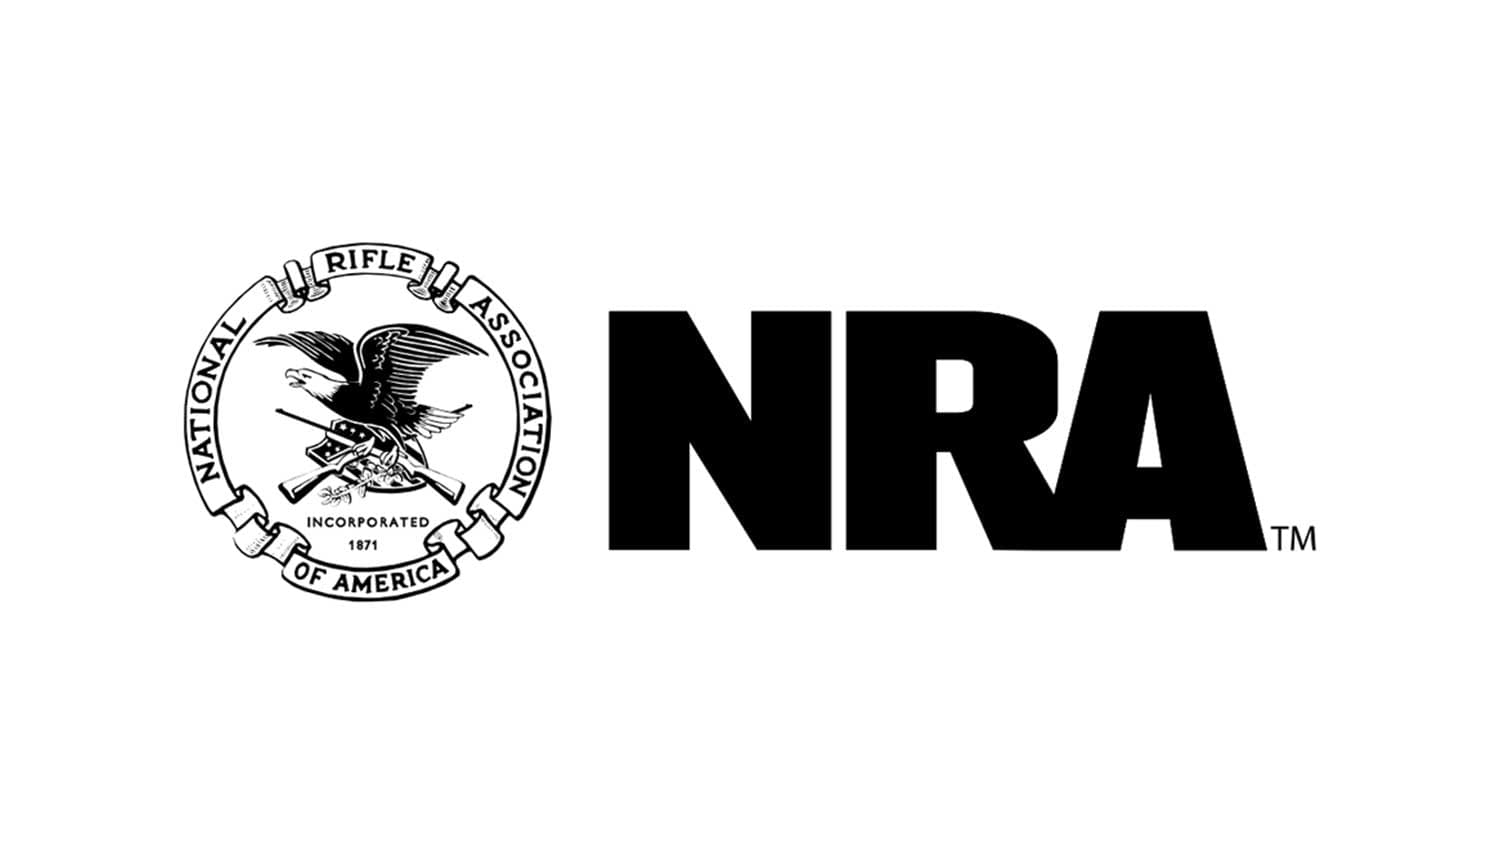 NRA Youth Education Summit at Shooting Range